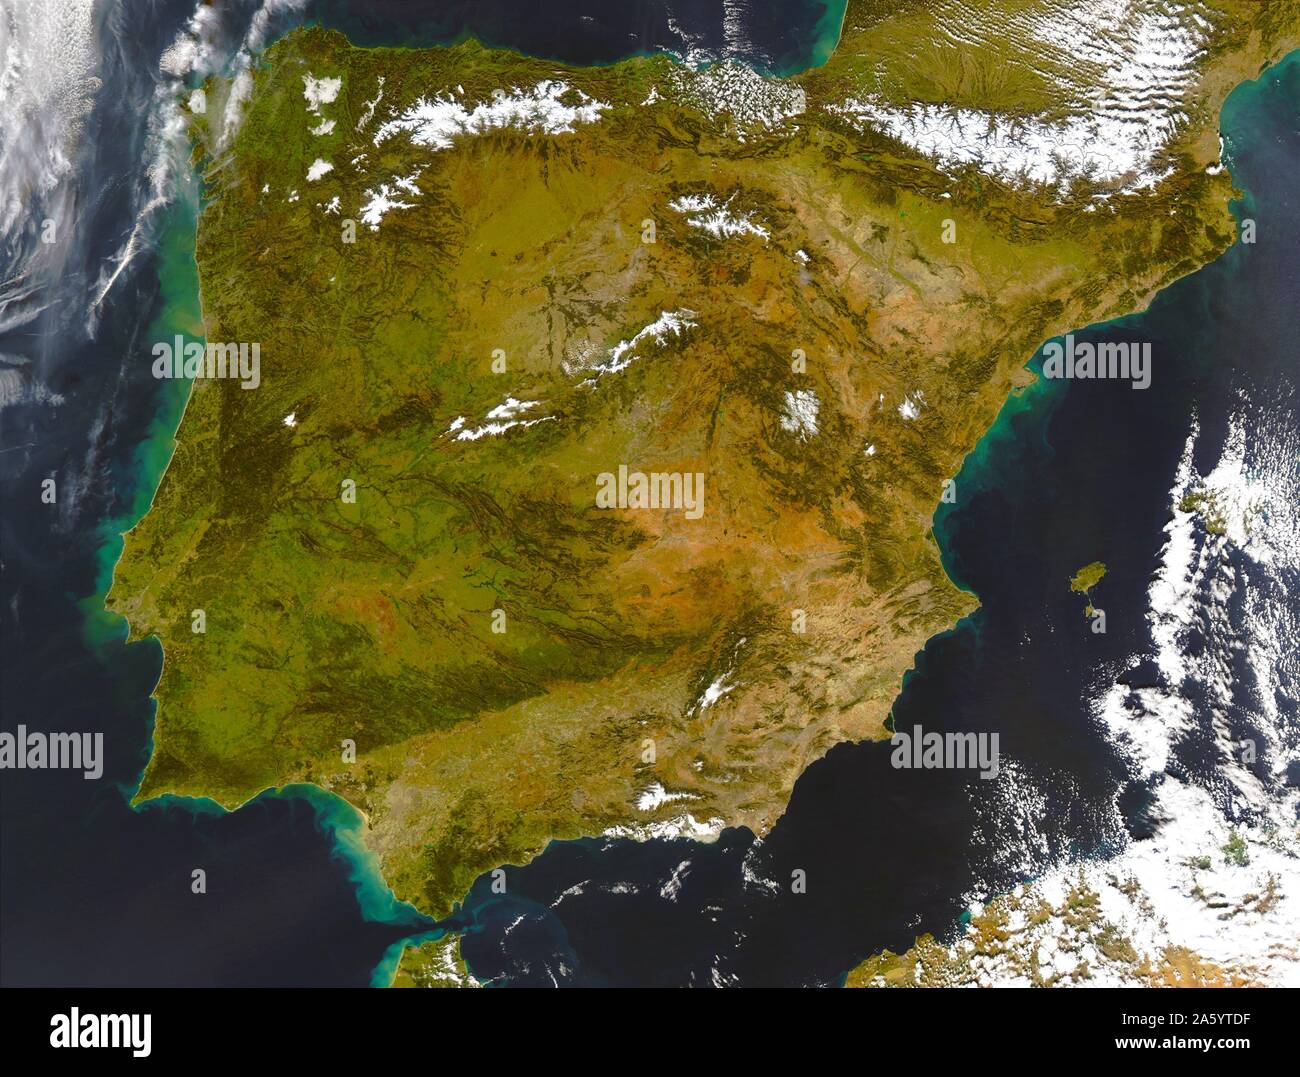 Iberian Peninsula (satellite image) showing Spain and Portugal. Stock Photo